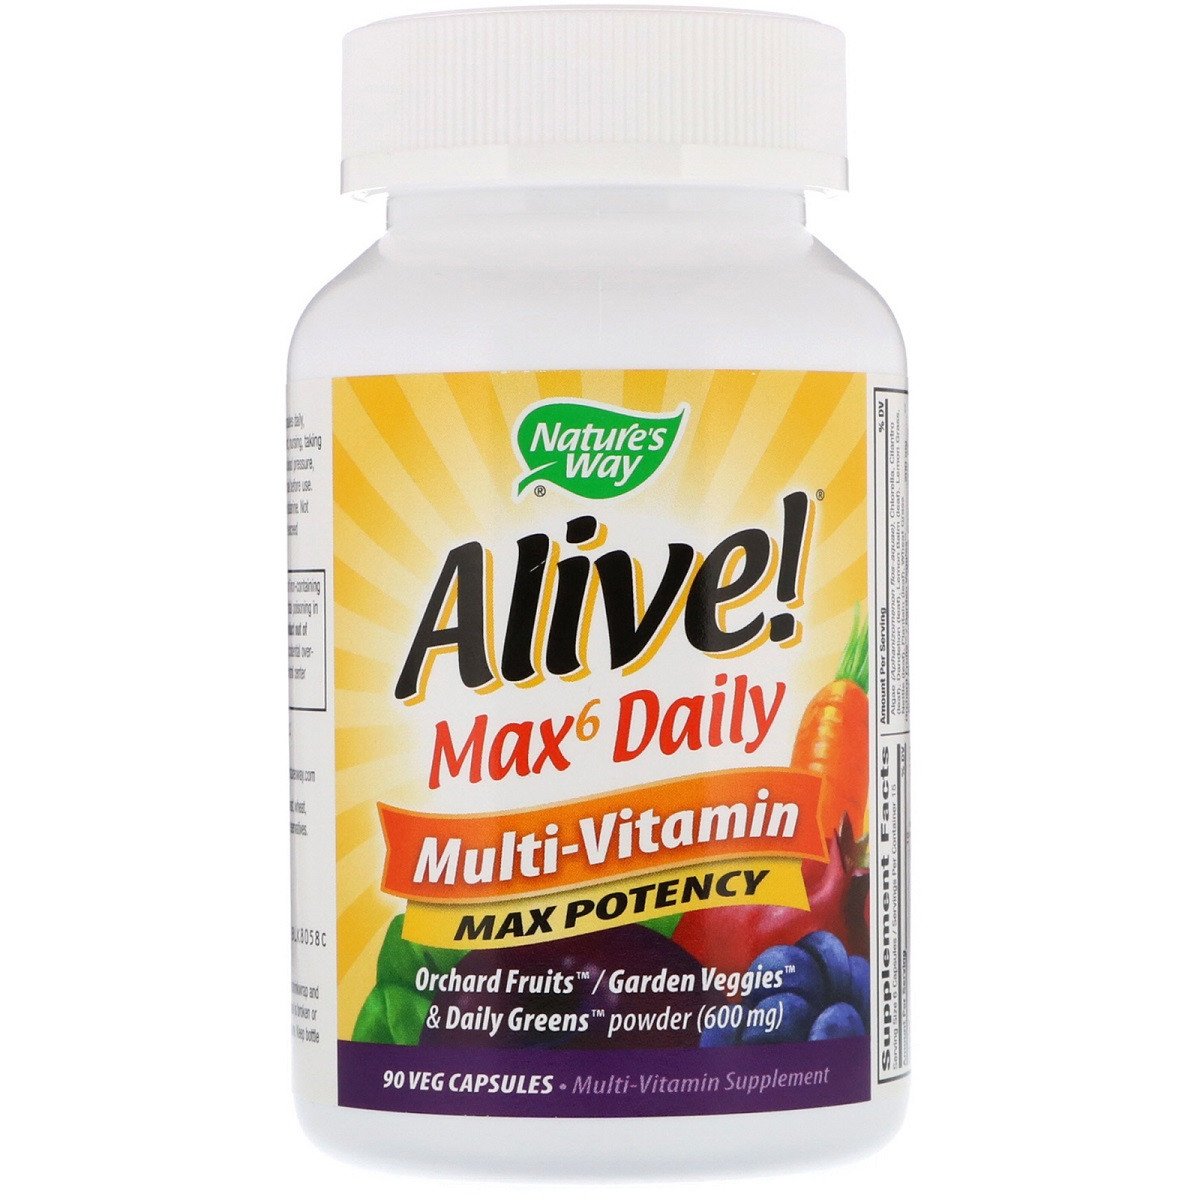 Nature's Way Мультивитамины Max6, Alive! Max6 Daily, Multi-Vitamin, Nature's Way 90 Капсул, , 